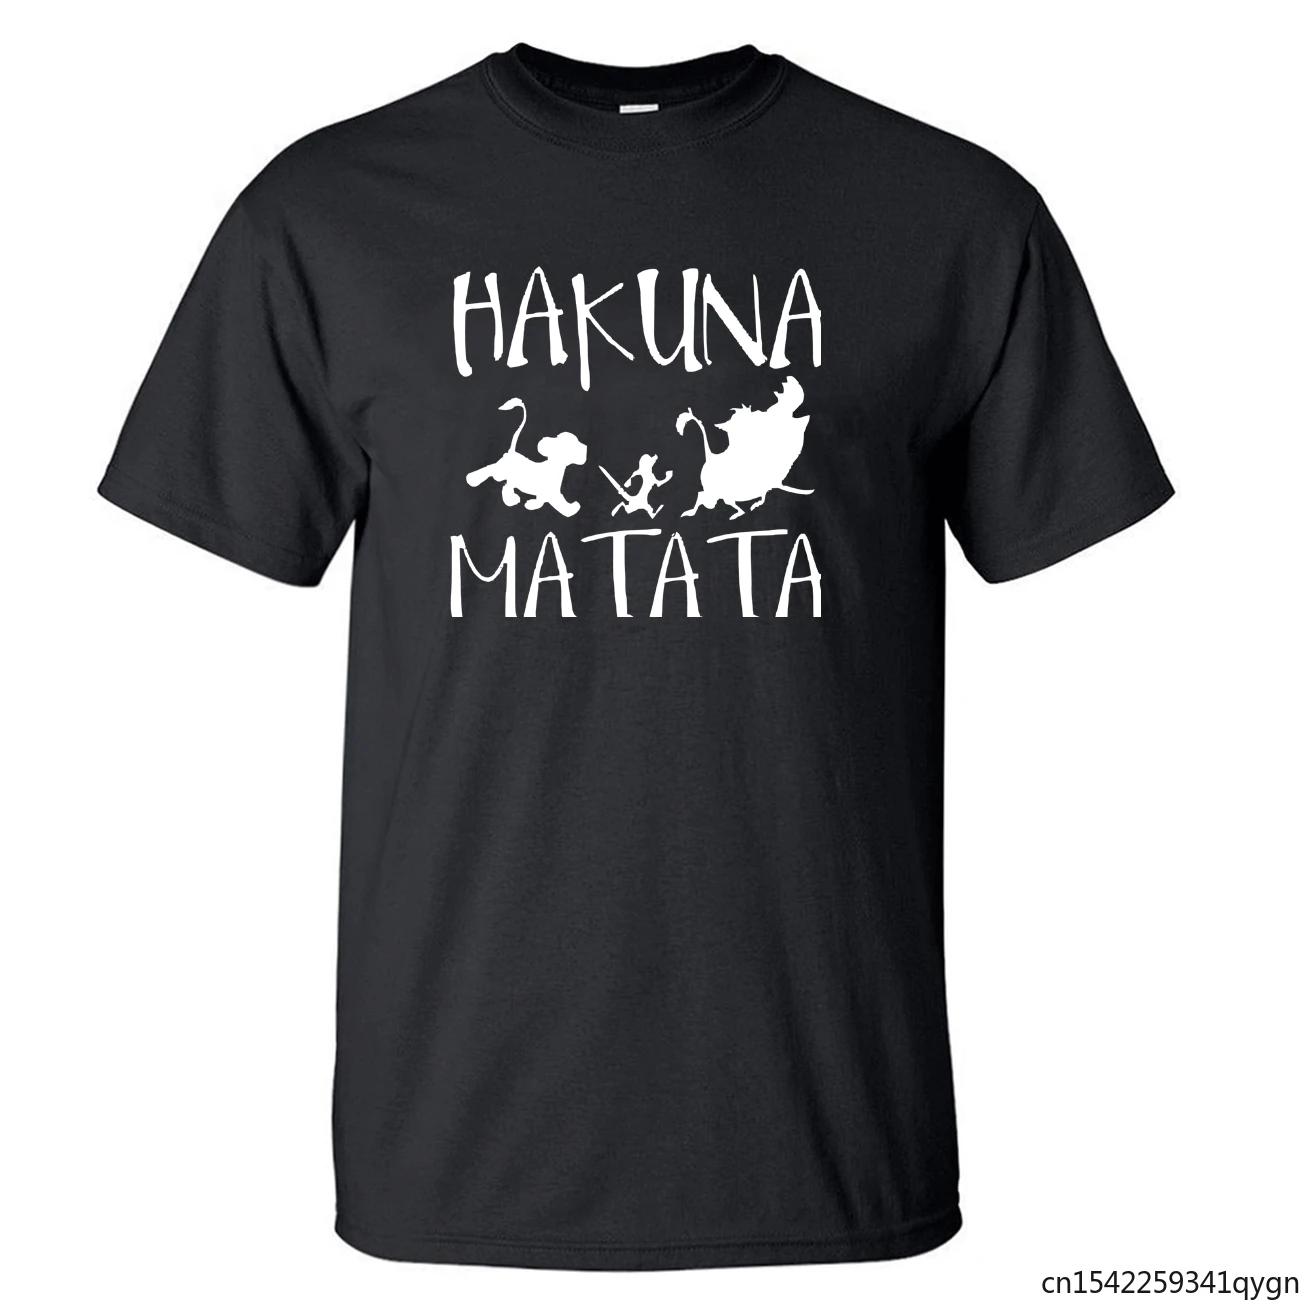 

Hakuna Matata The Lion King T Shirt Men Cartoon Movie Simba Pumbaa Timon Summer Tops TShirt Cool Funny Print Black T-Shirt Tees